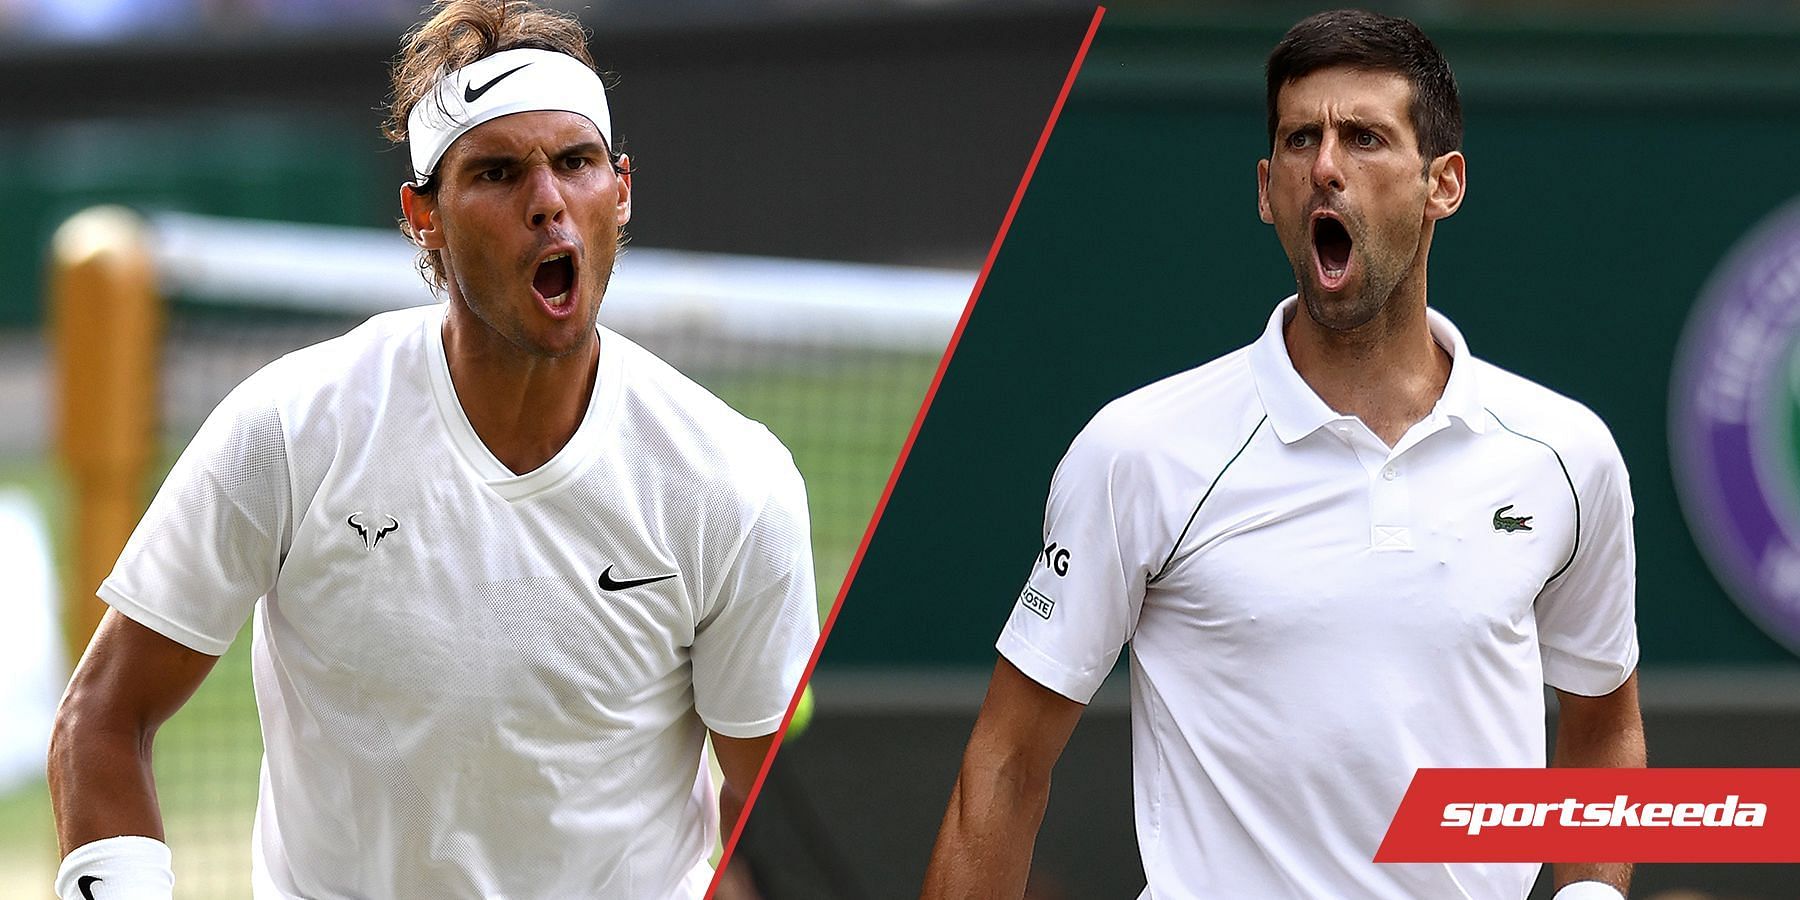 Rafael Nadal and Novak Djokovic are two of the favorites to win &lt;a href=&#039;https://www.sportskeeda.com/go/wimbledon&#039; target=&#039;_blank&#039; rel=&#039;noopener noreferrer&#039;&gt;Wimbledon&lt;/a&gt;